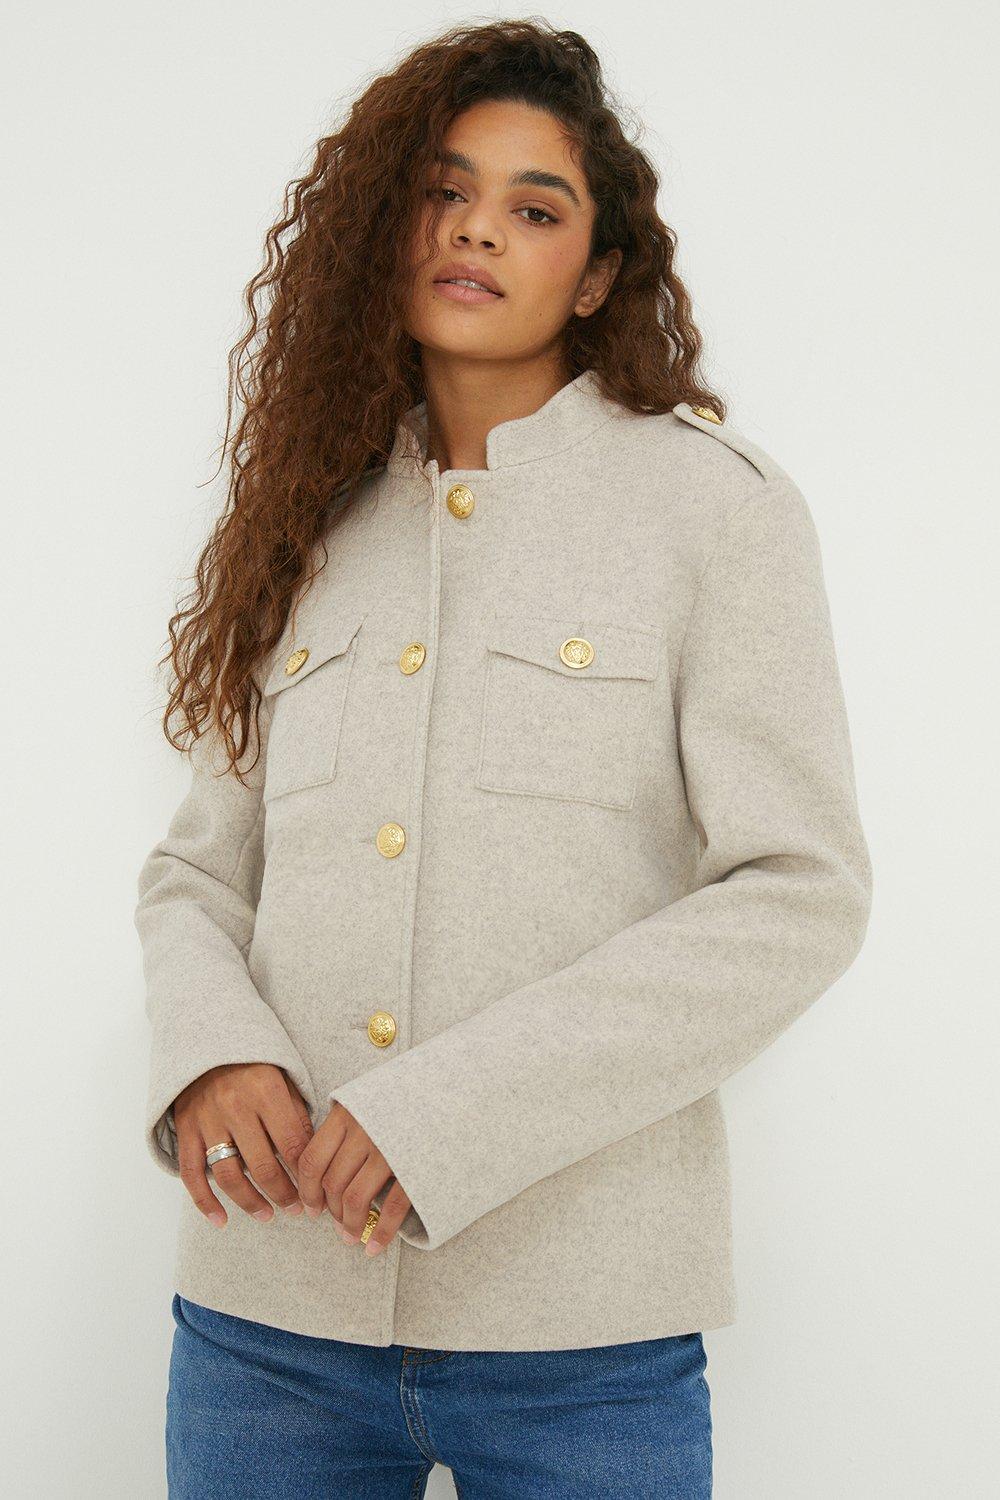 Women’s Tall Wool Look Military Coat - cream - S